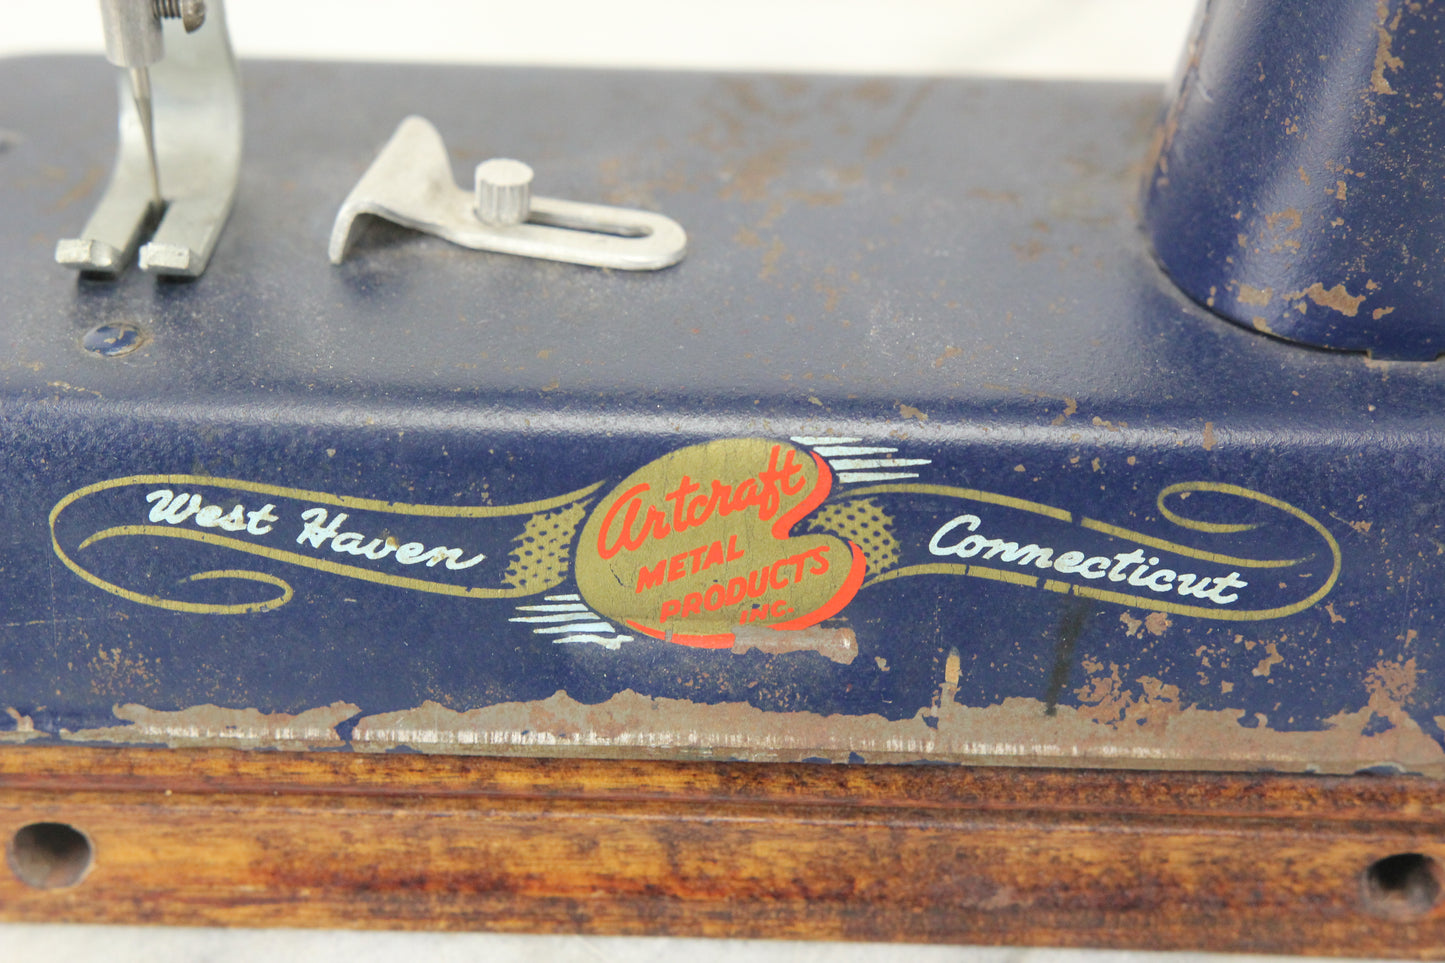 Artcraft Metal Products Junior Miss 1940s Handcrank Toy Sewing Machine